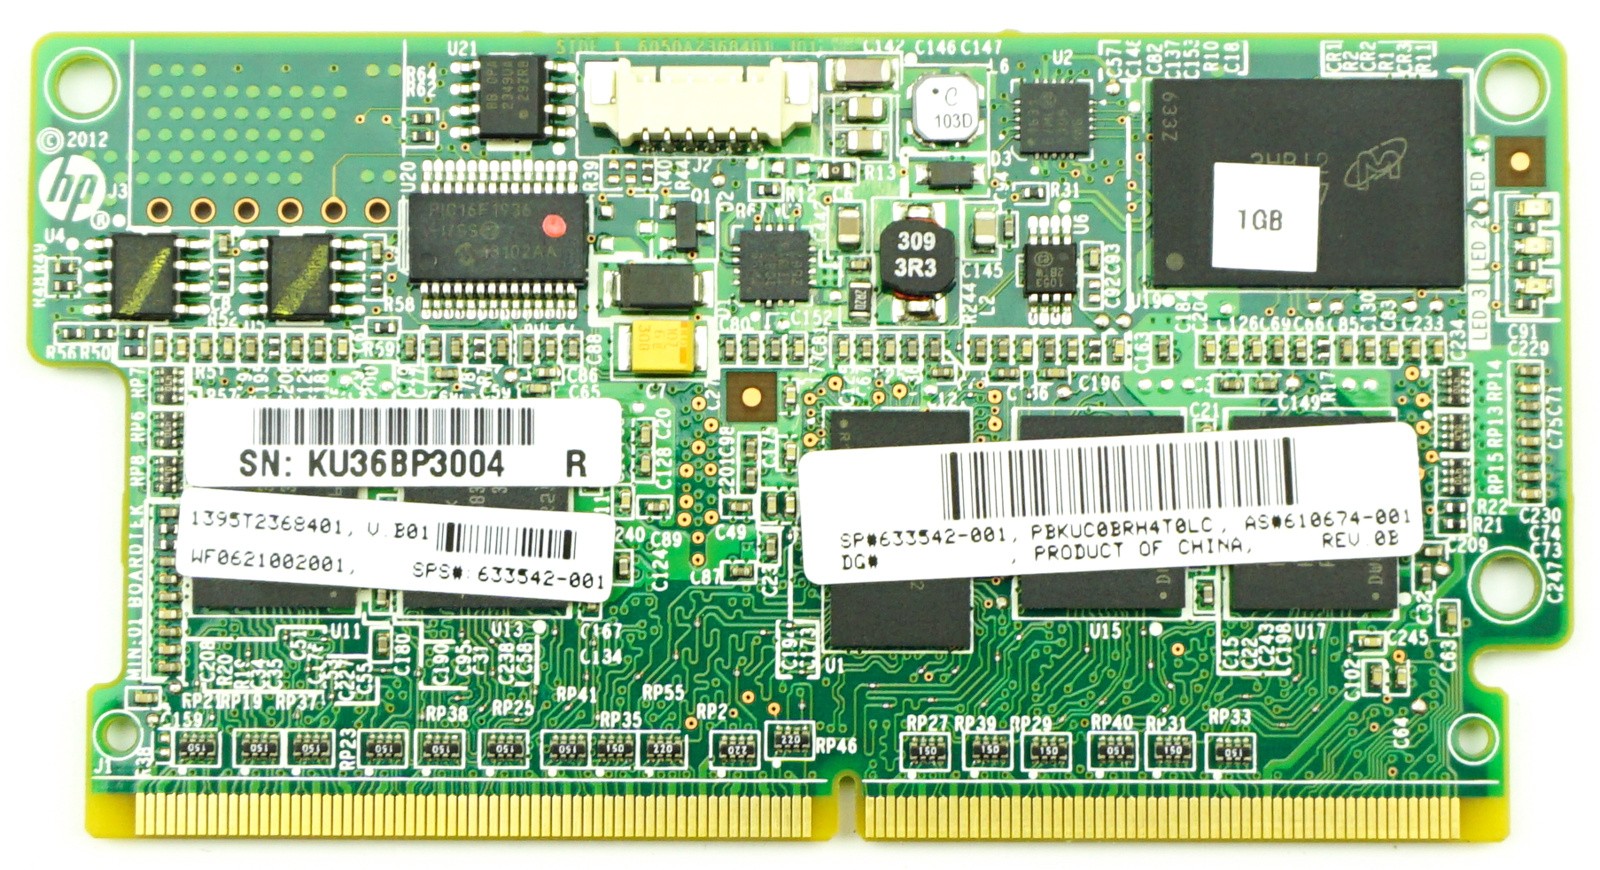 HP Smart Array P420, P421 - 1GB FBWC Controller Memory